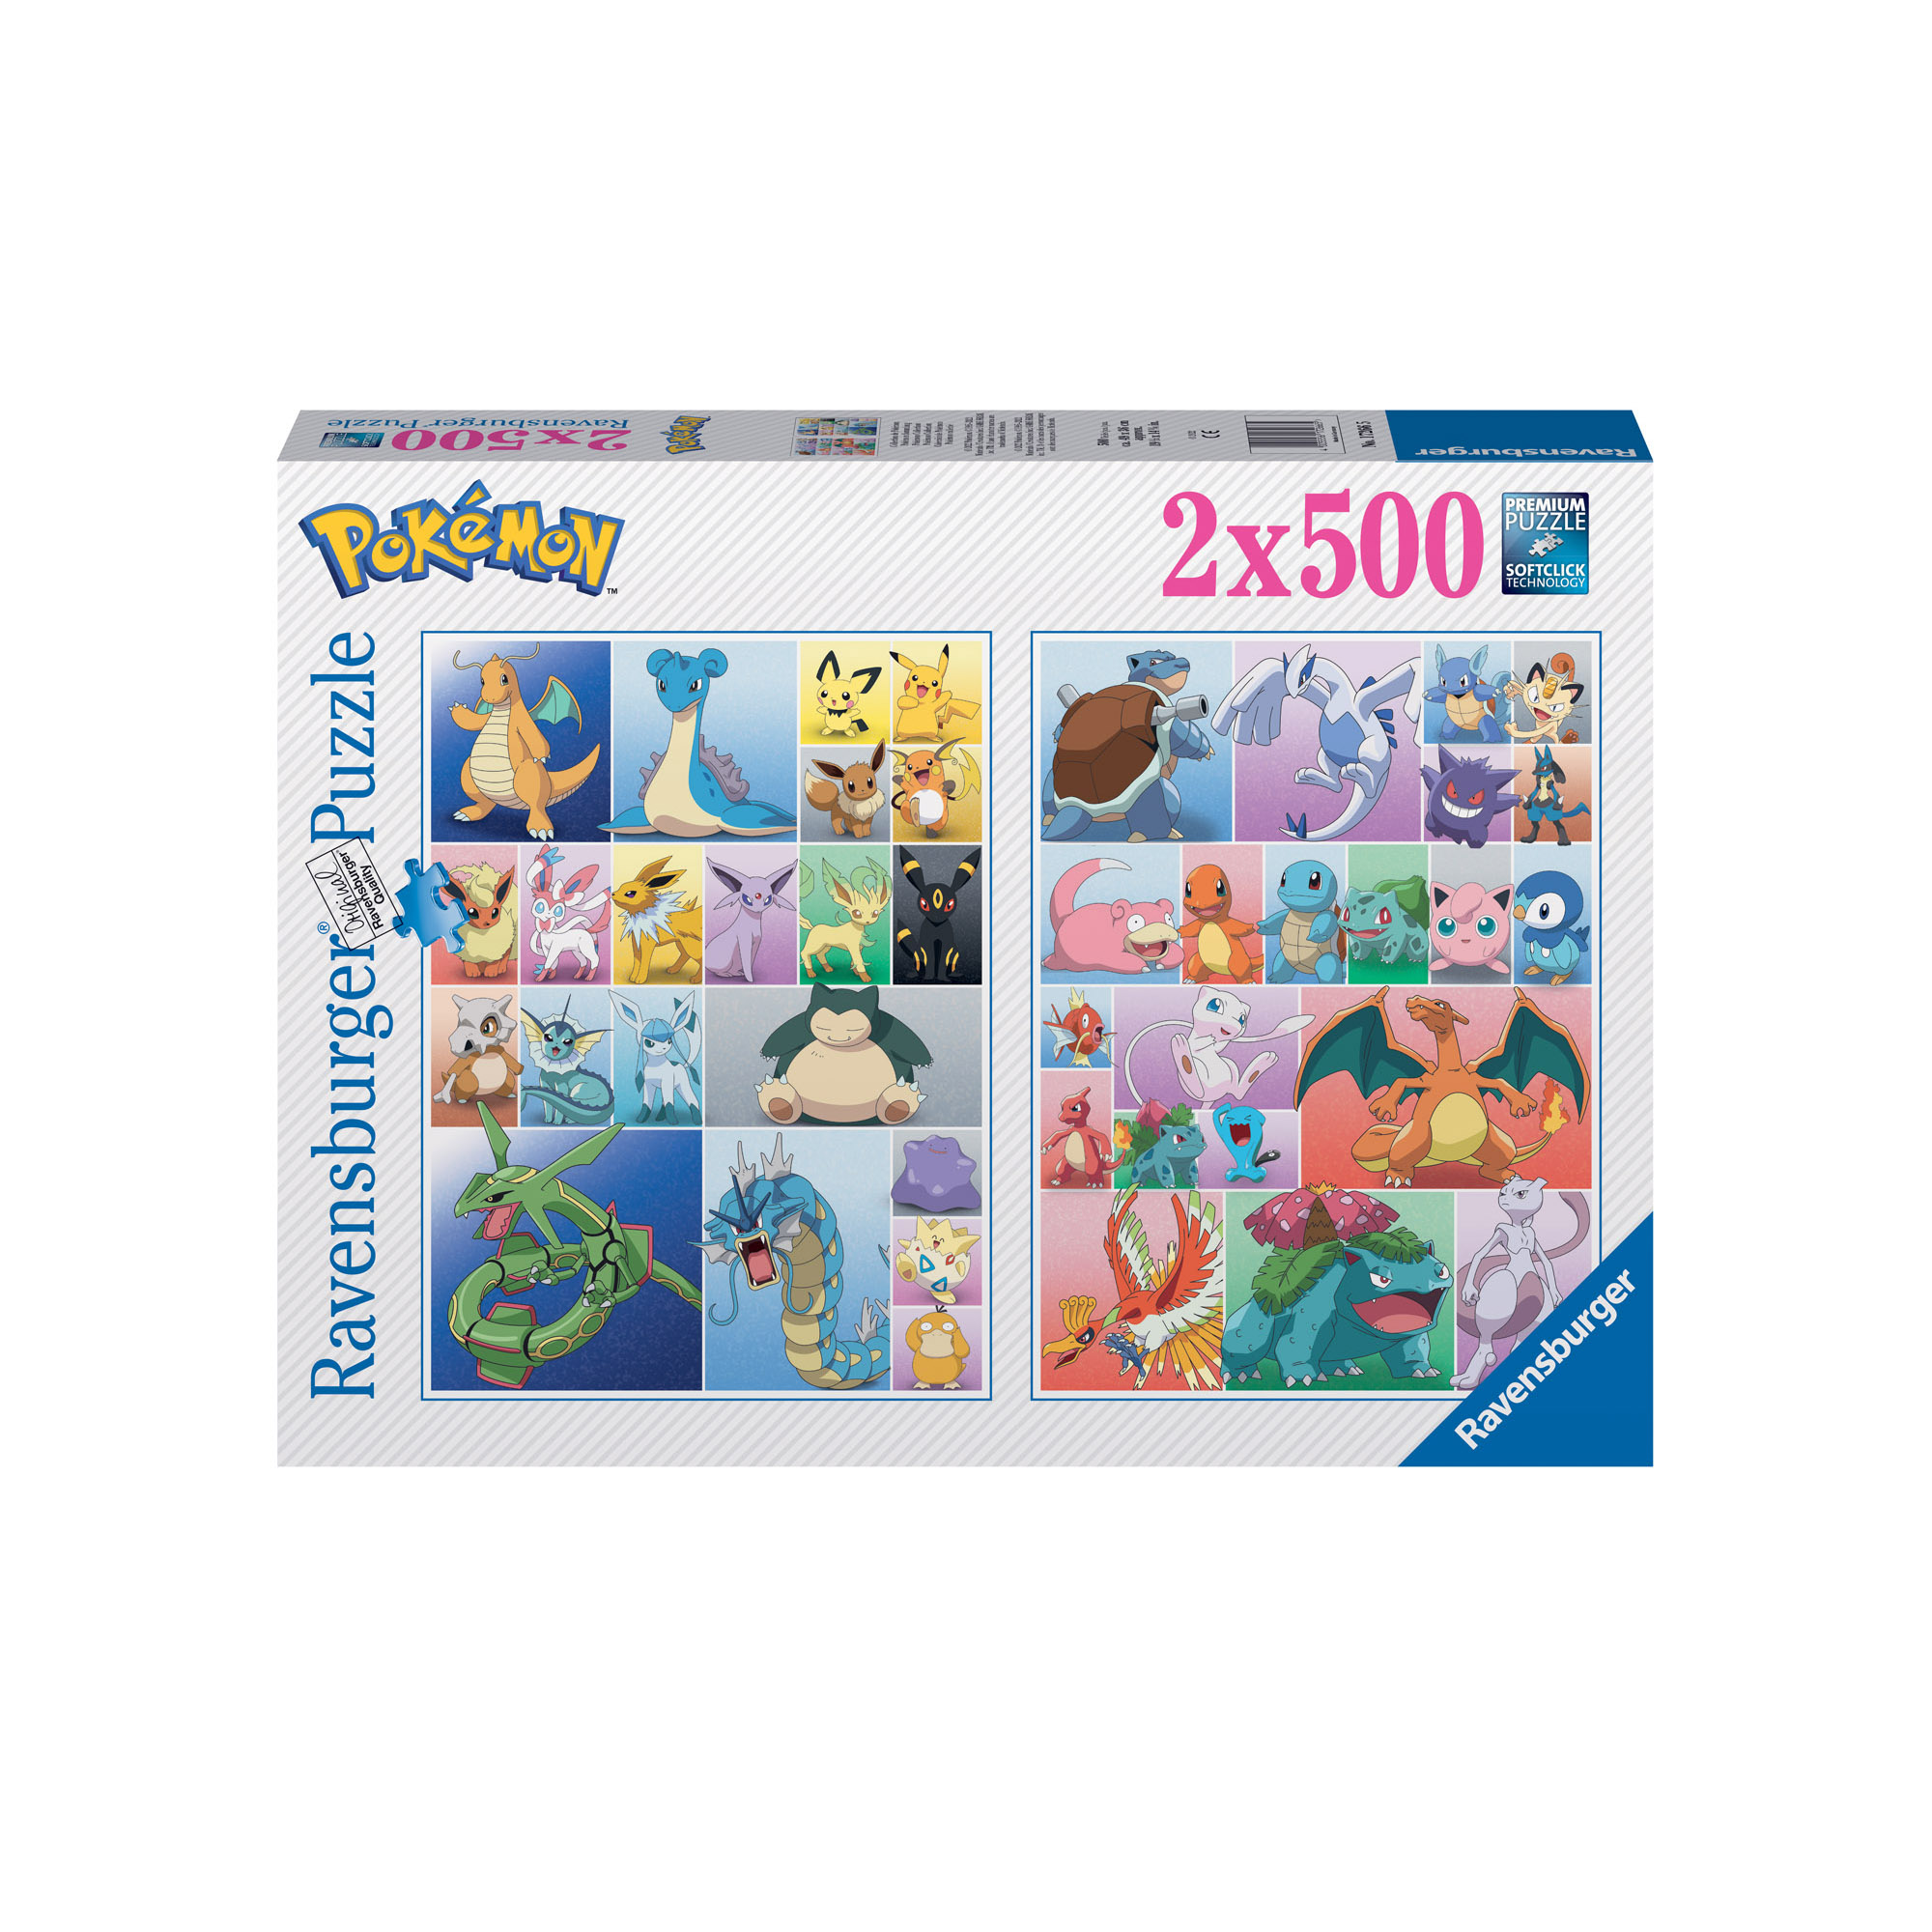 Ravensburger - puzzle pokémon, 2x500 pezzi, puzzle adulti - 3751, RAVENSBURGER